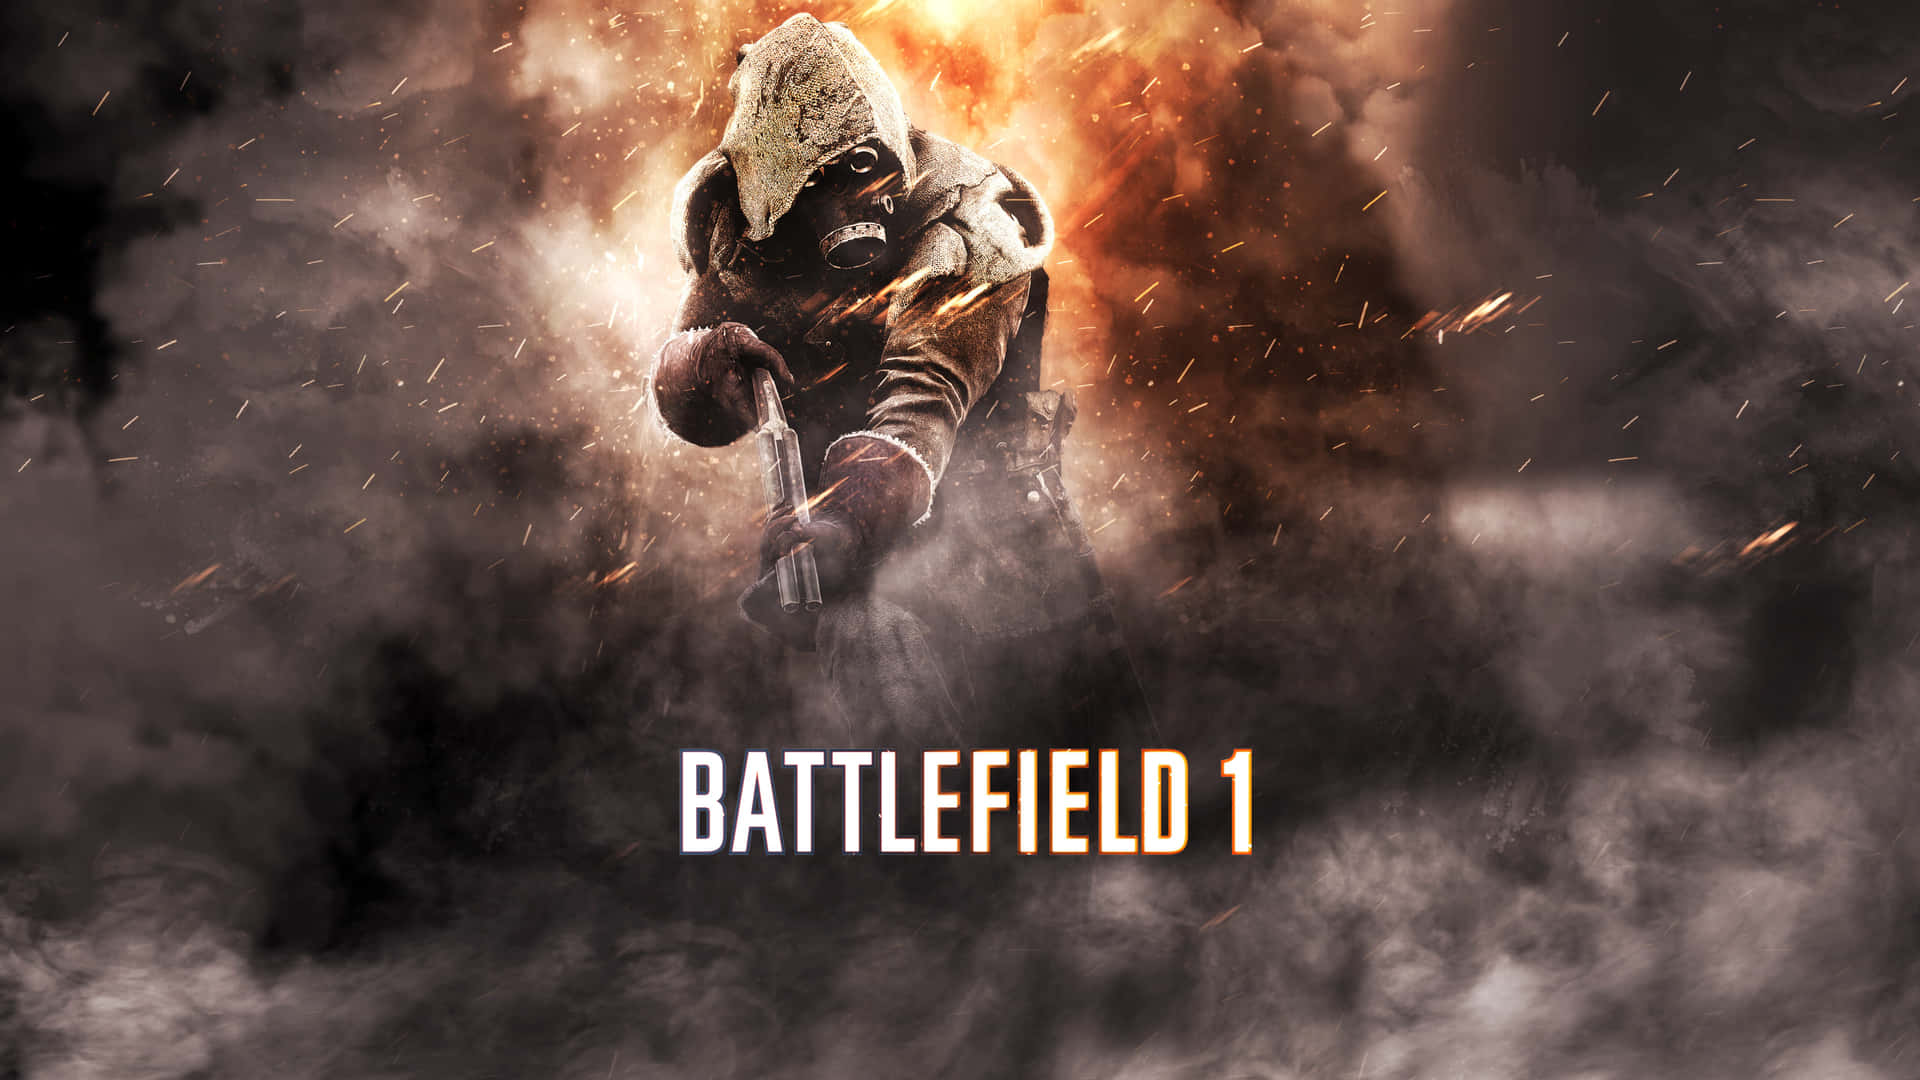 Fight the Great War: Experience Battlefield 1